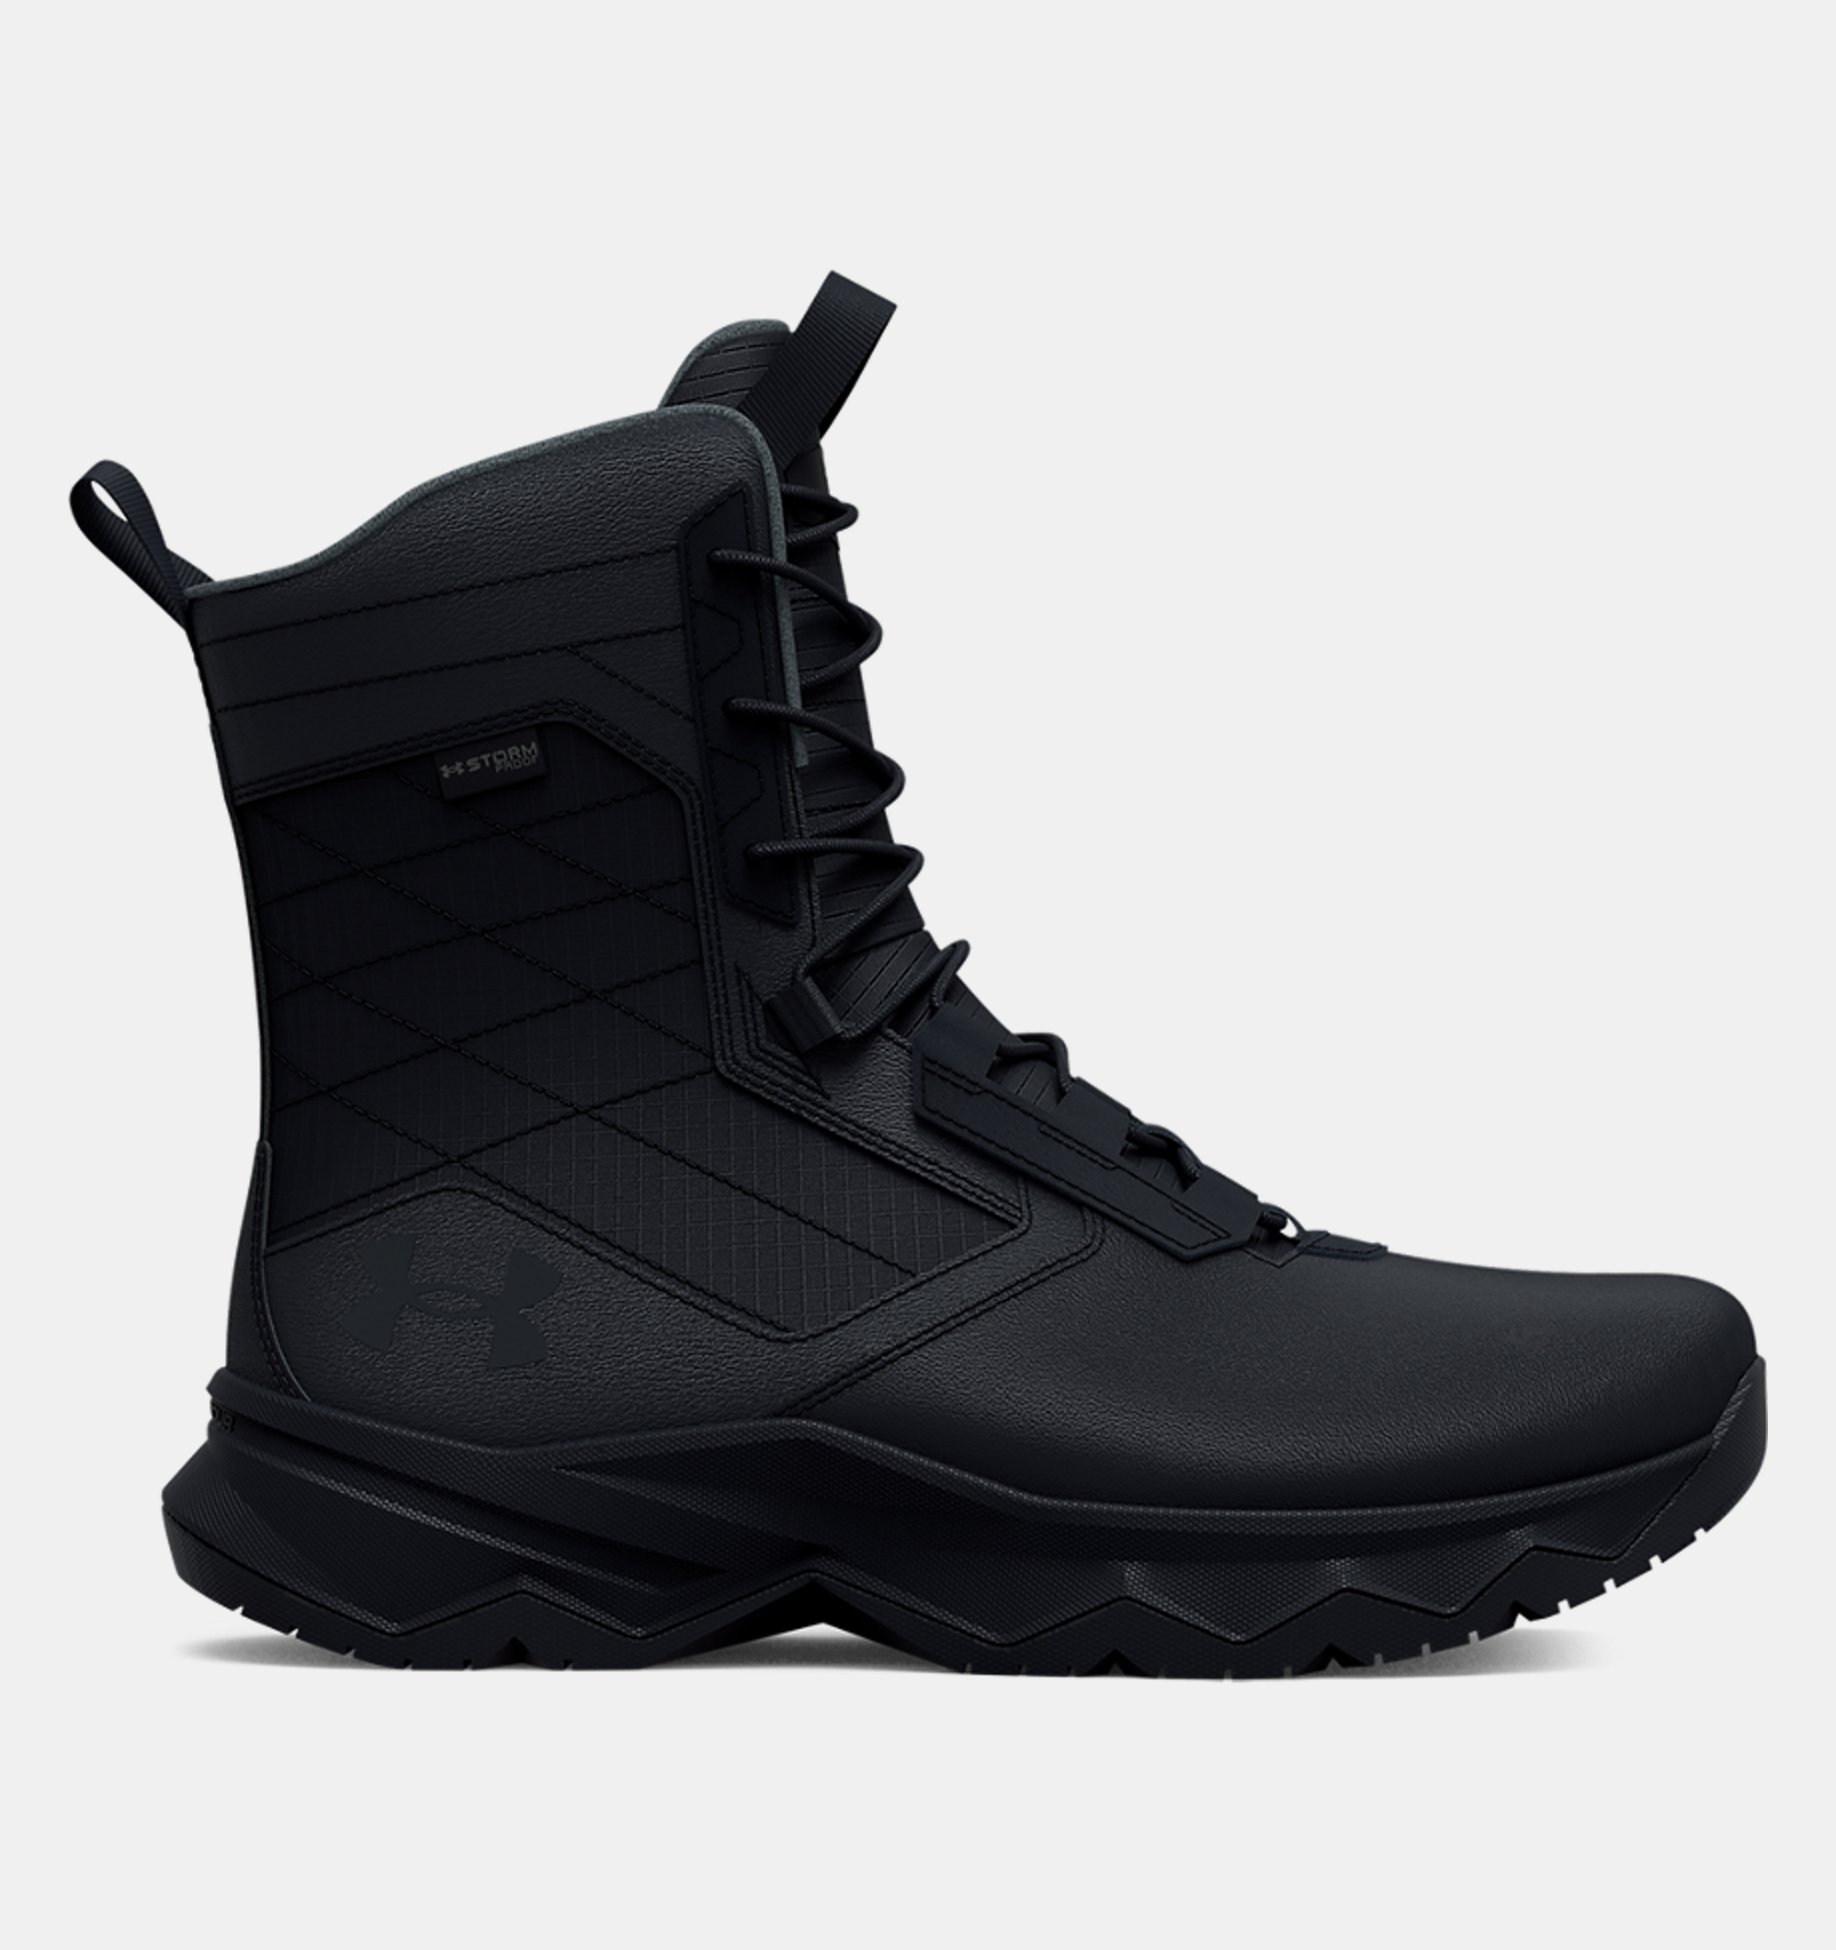 Underarmour Mens UA Stellar G2 Waterproof Tactical Boots